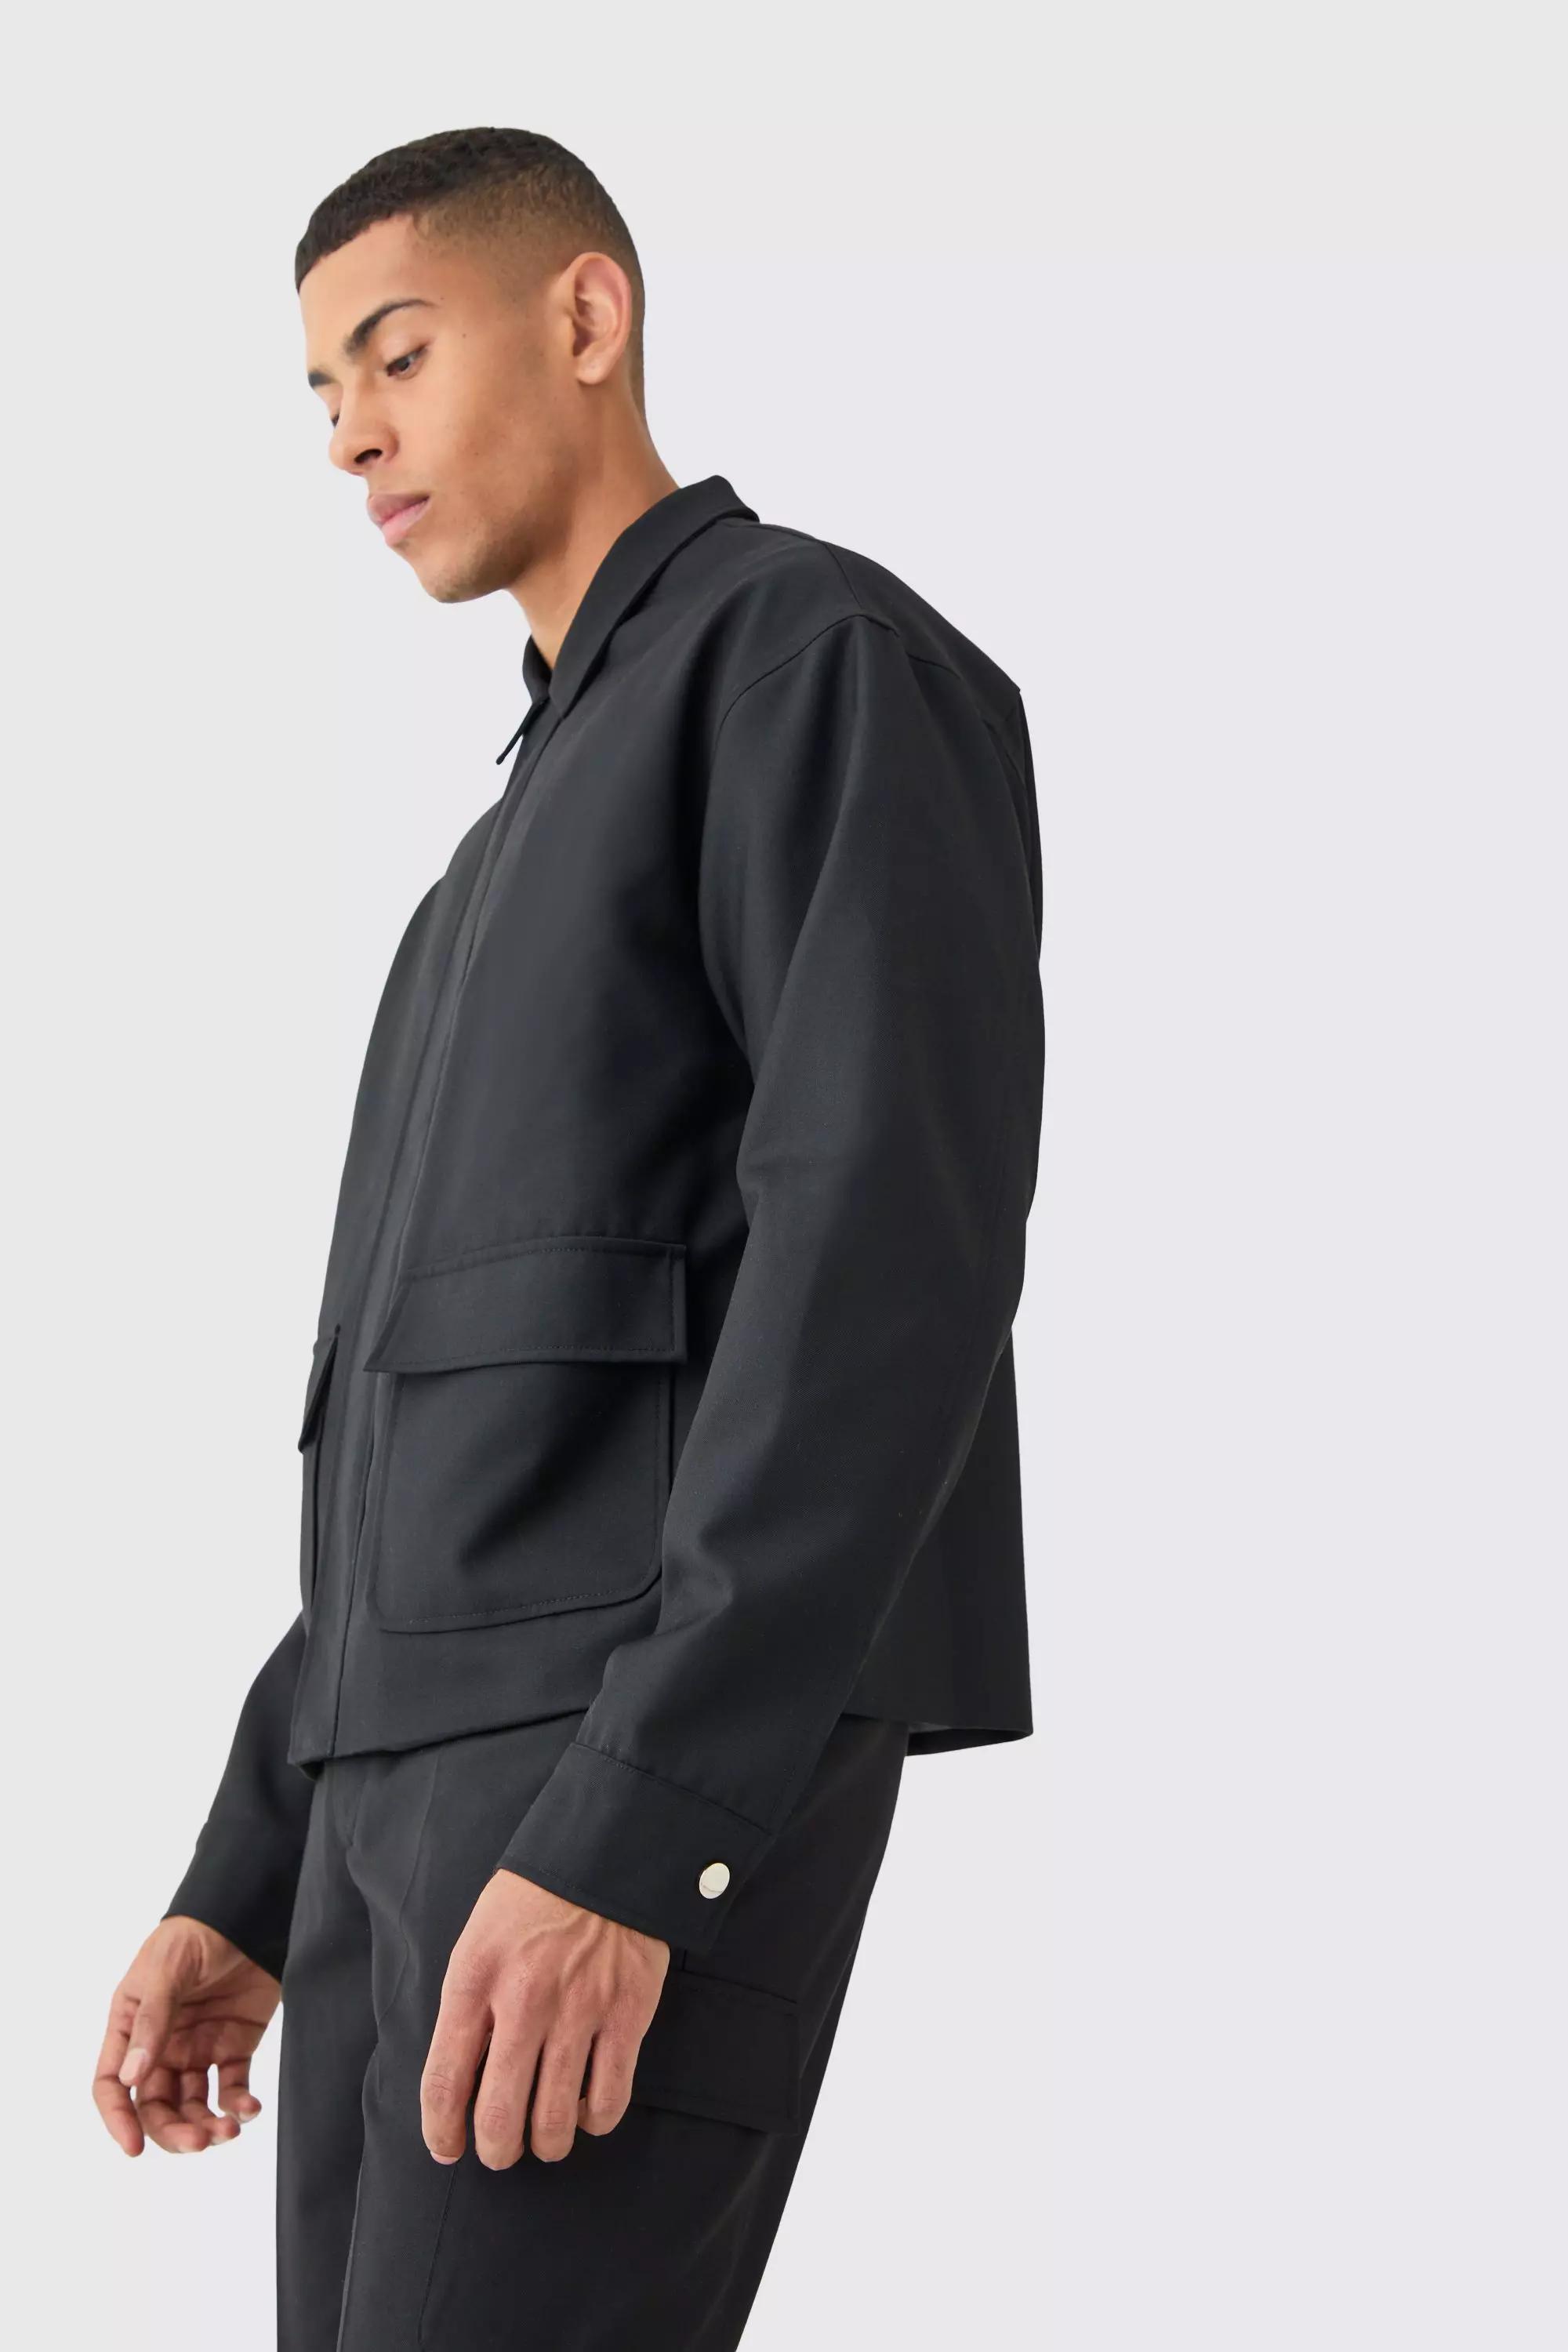 Tailored Harrington Jacket Black